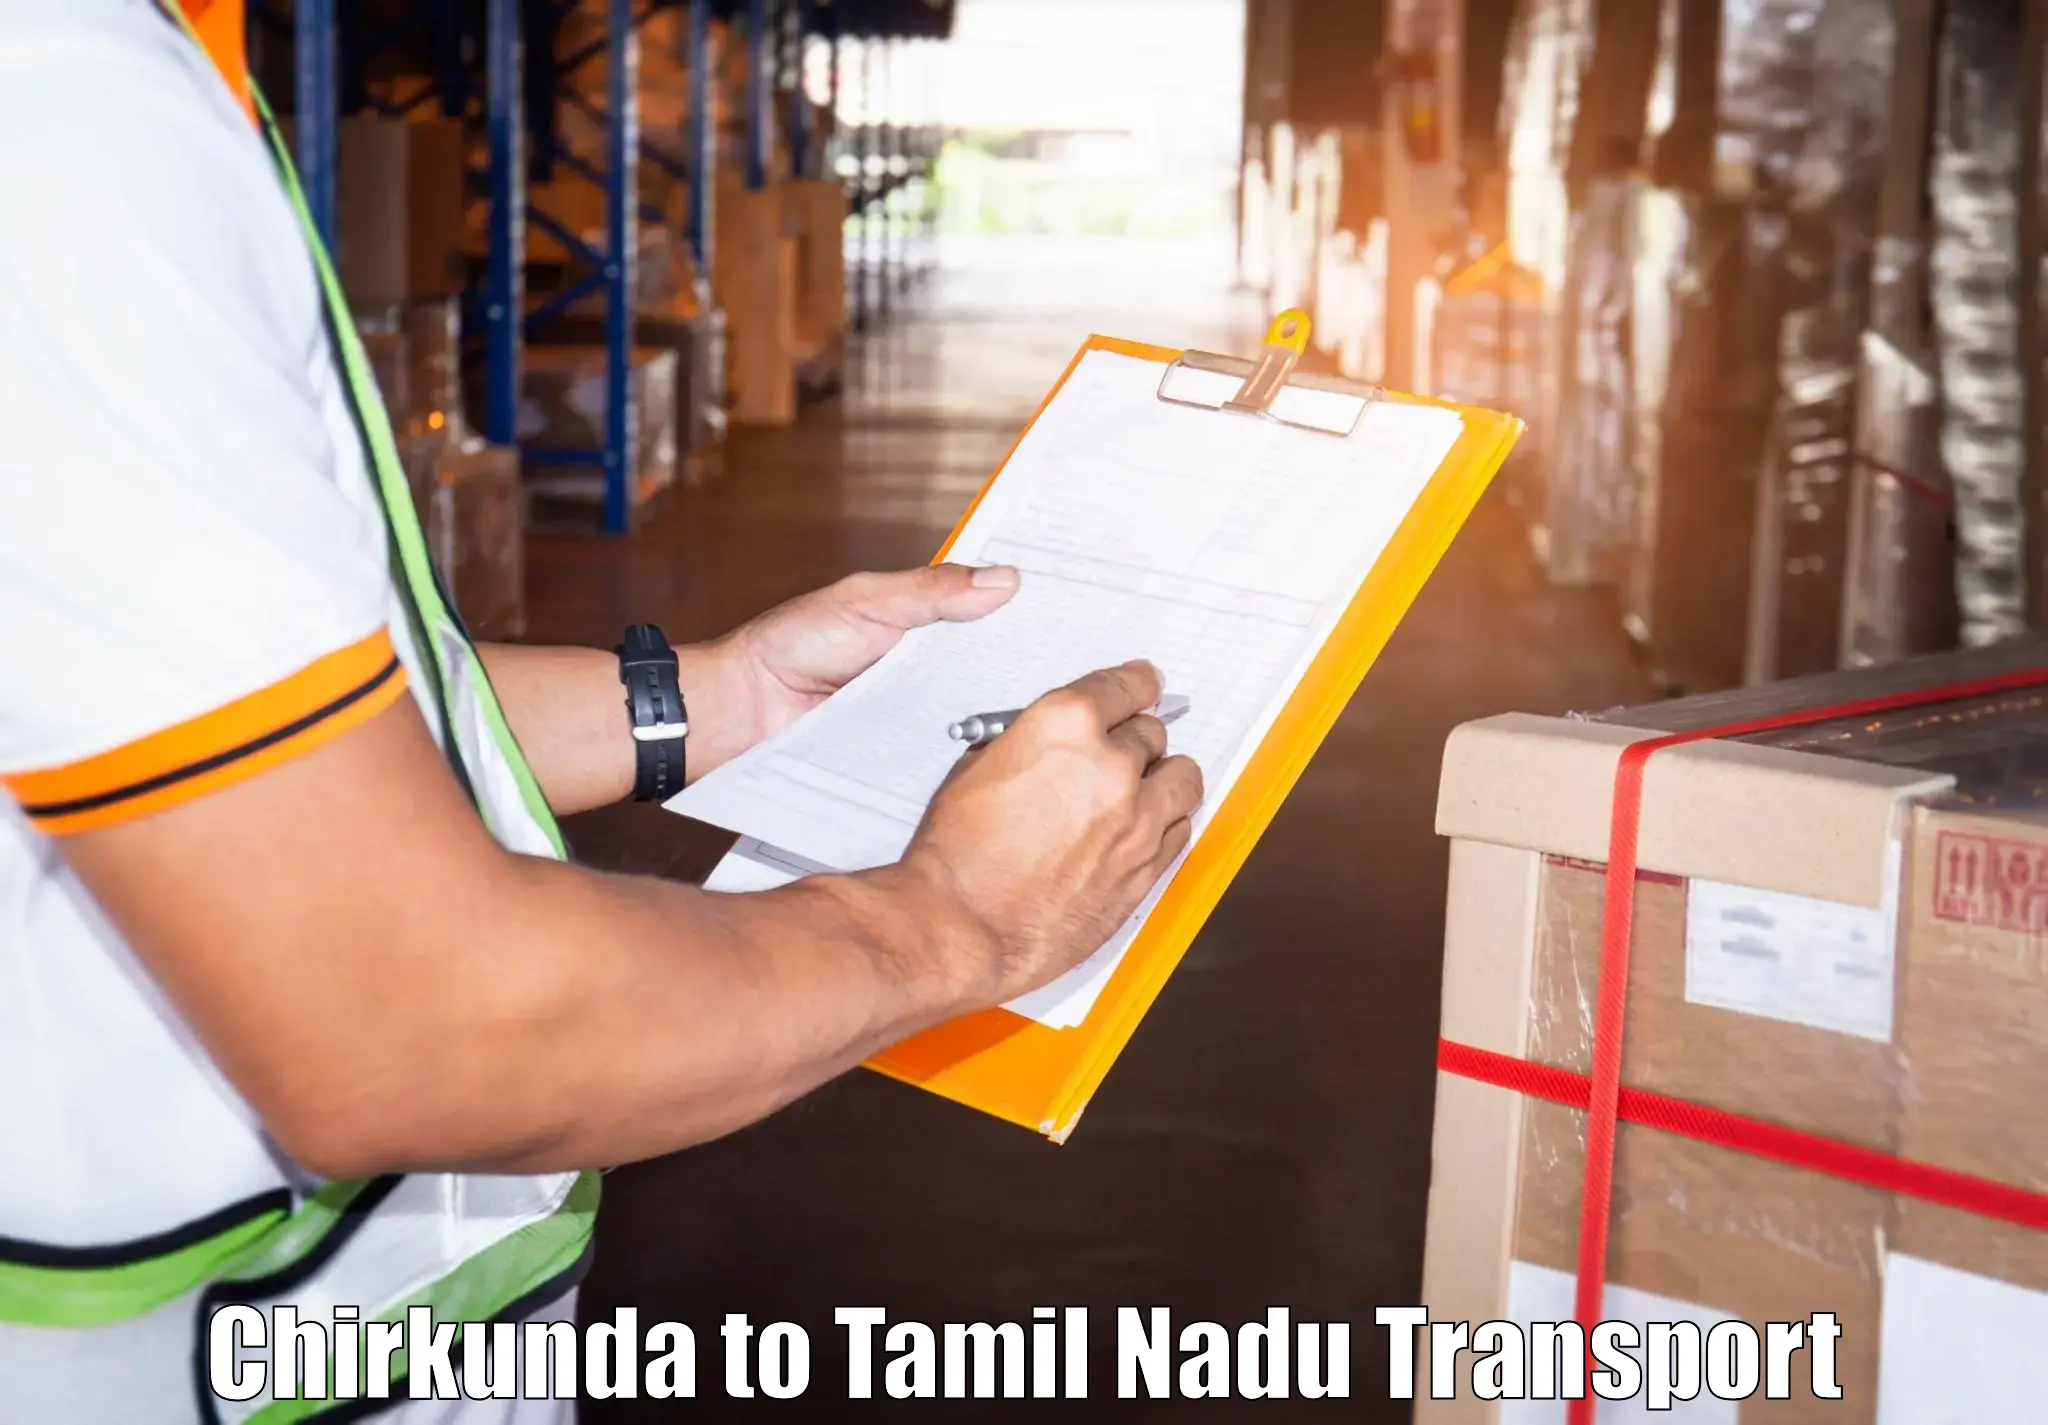 Bike transport service Chirkunda to Tamil Nadu